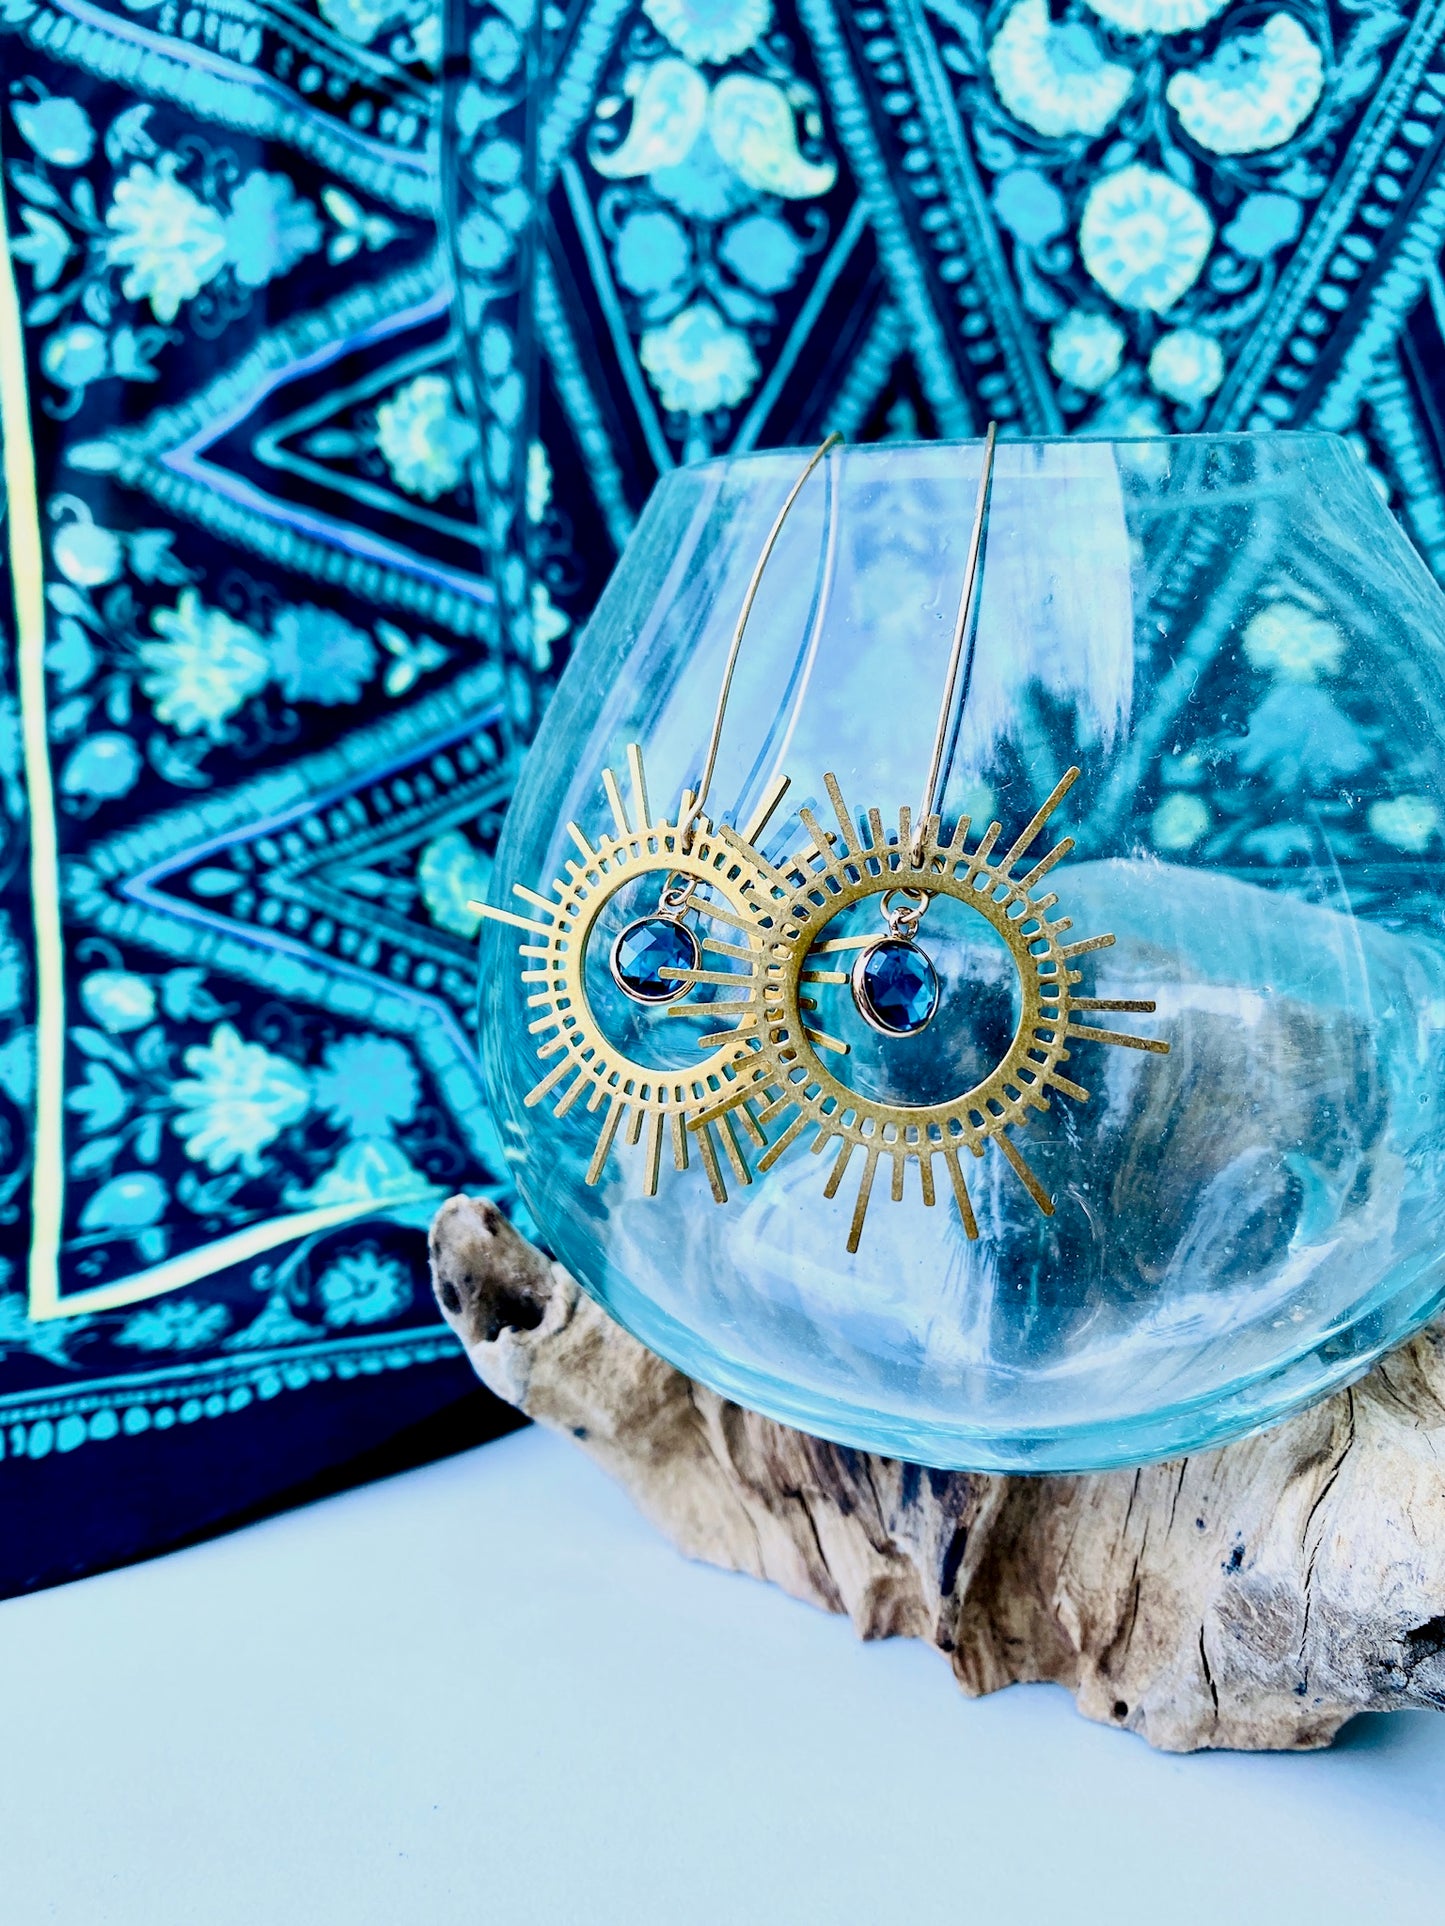 Brass Sunburst Earrings in Peacock Blue